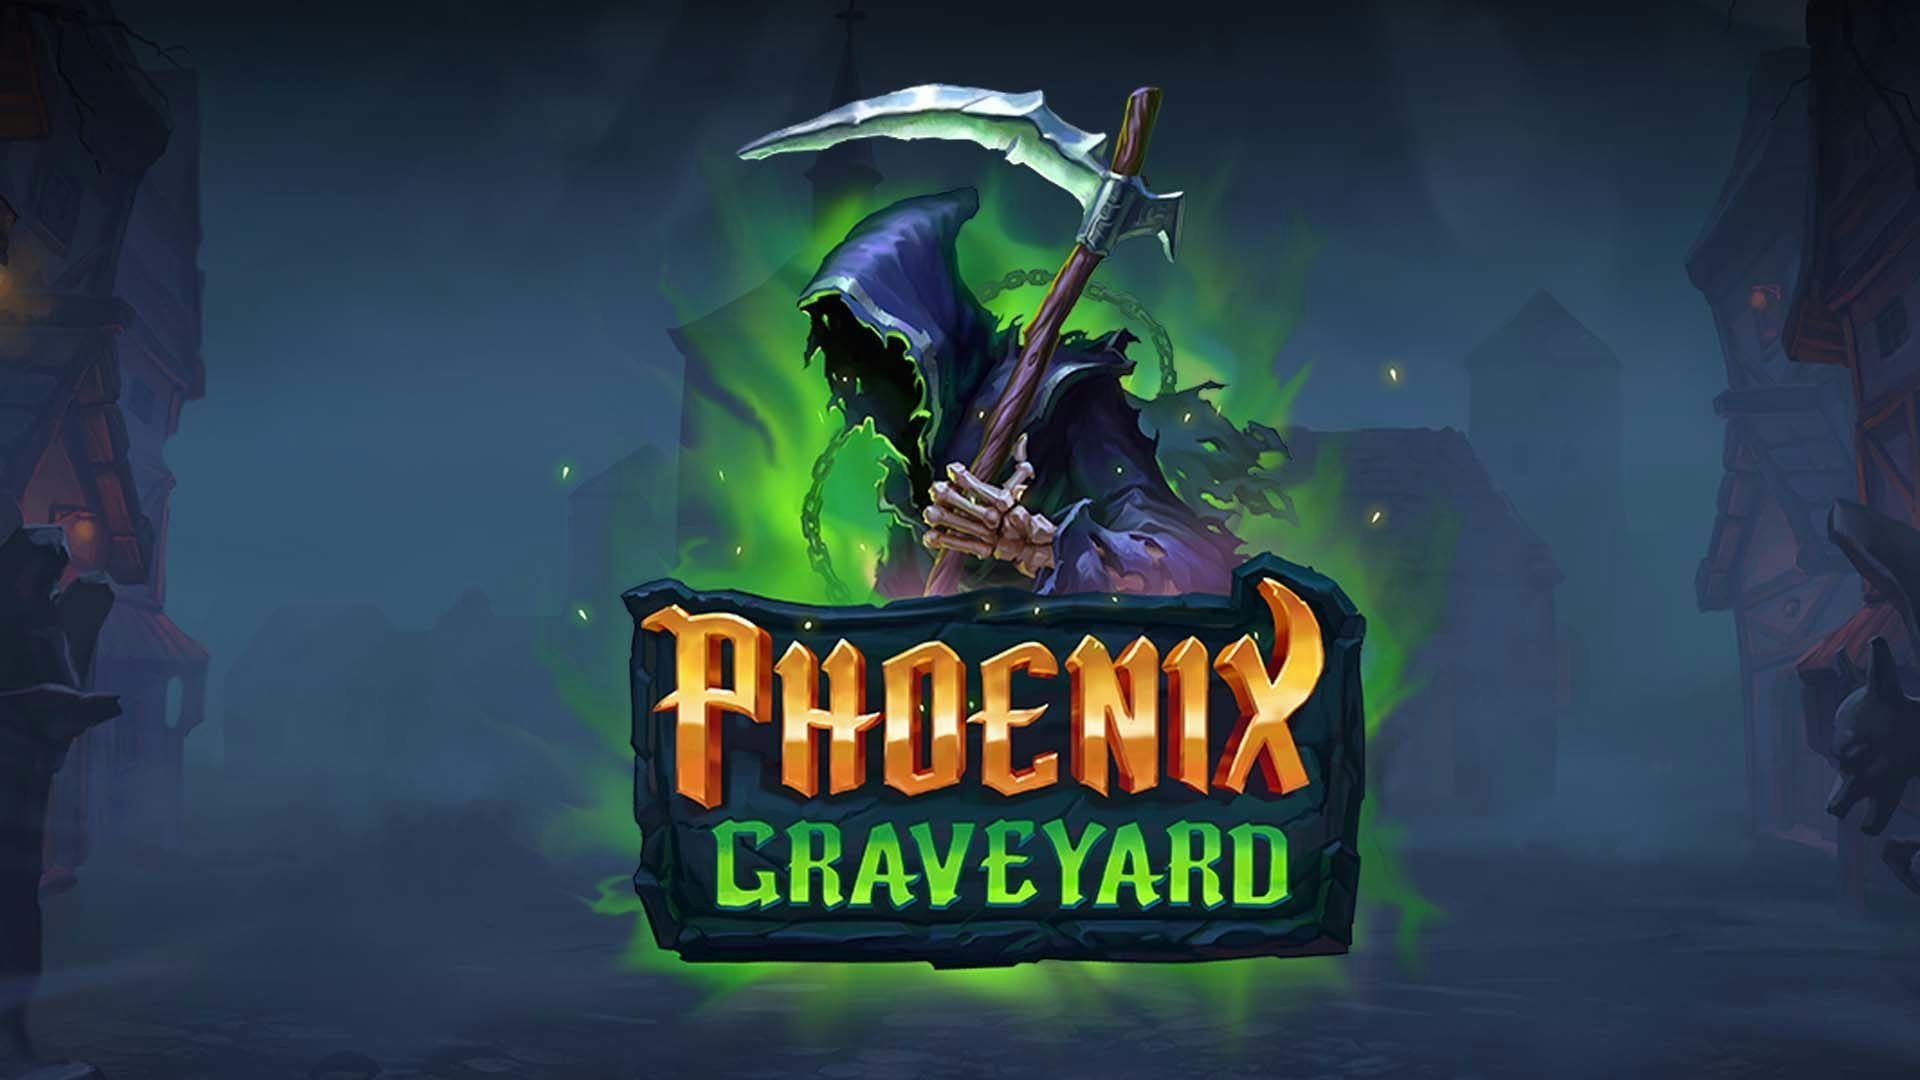 Phoenix Graveyard Slot Machine Online Free Game Play